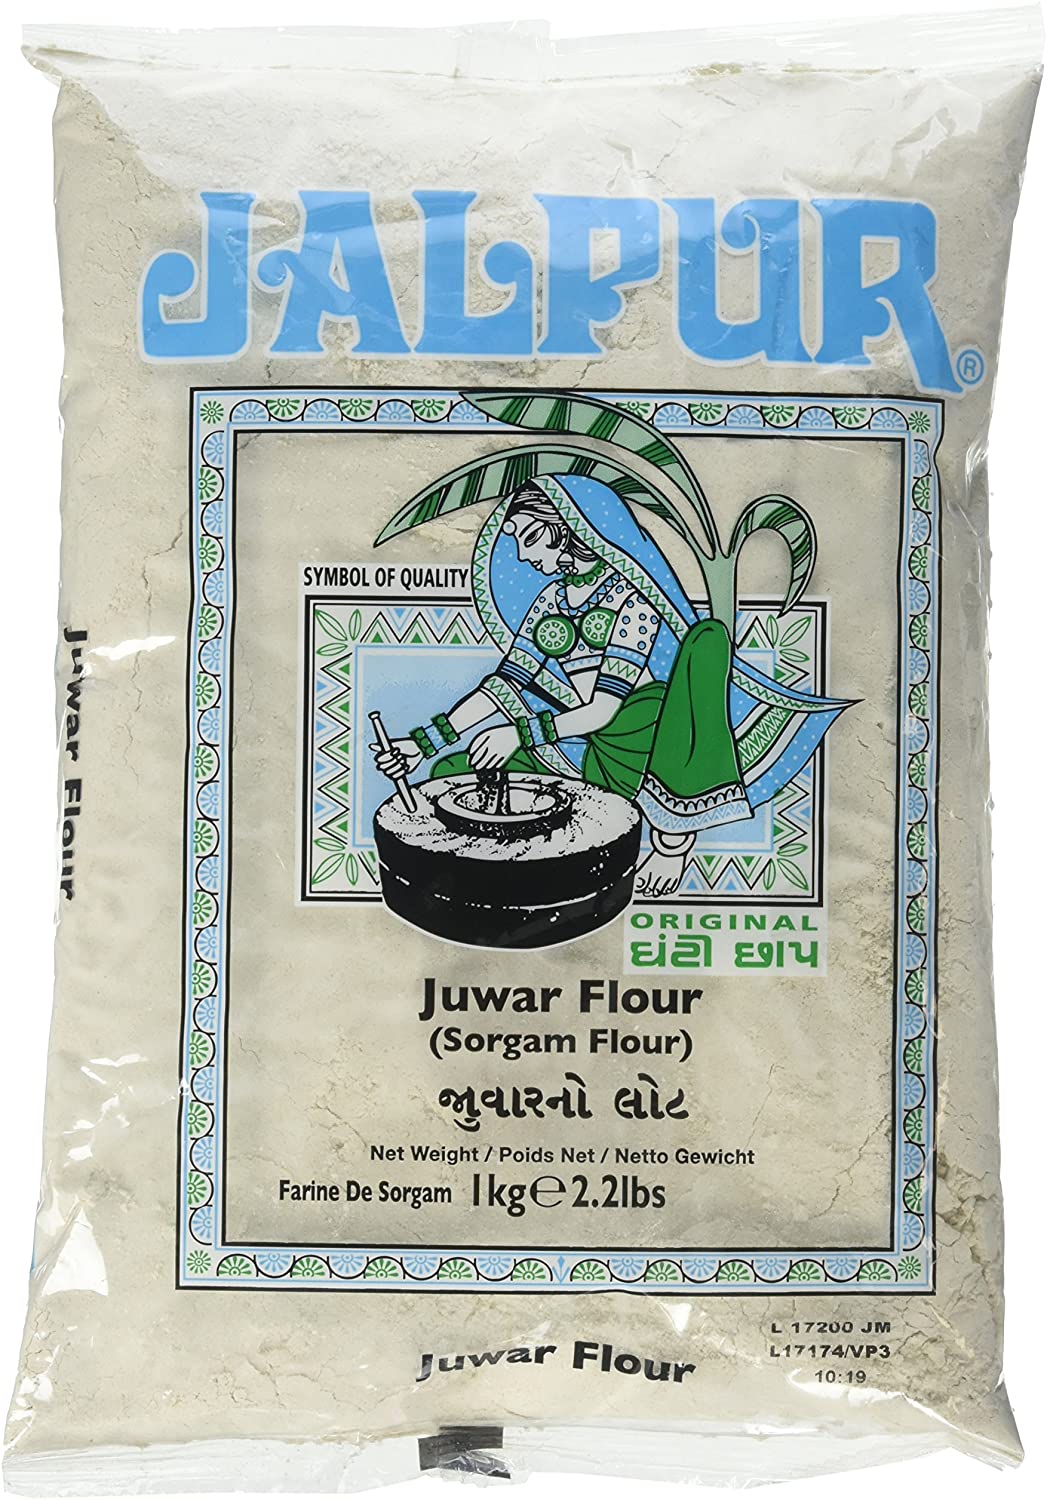 Jalpur Juwar Flour 1kg